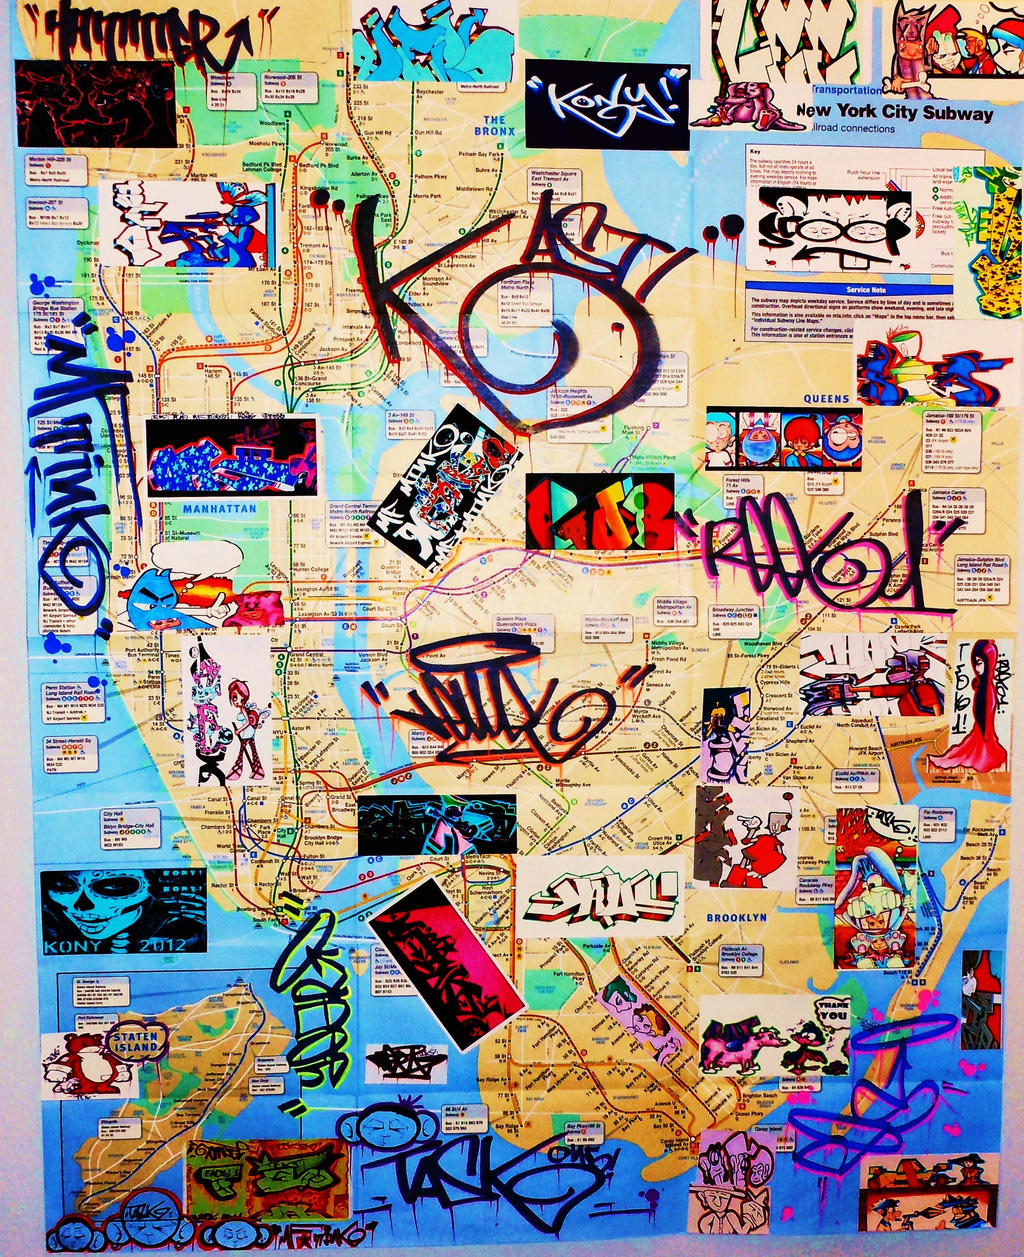 New York City Graffiti Art Subway Map by MF-minK on DeviantArt